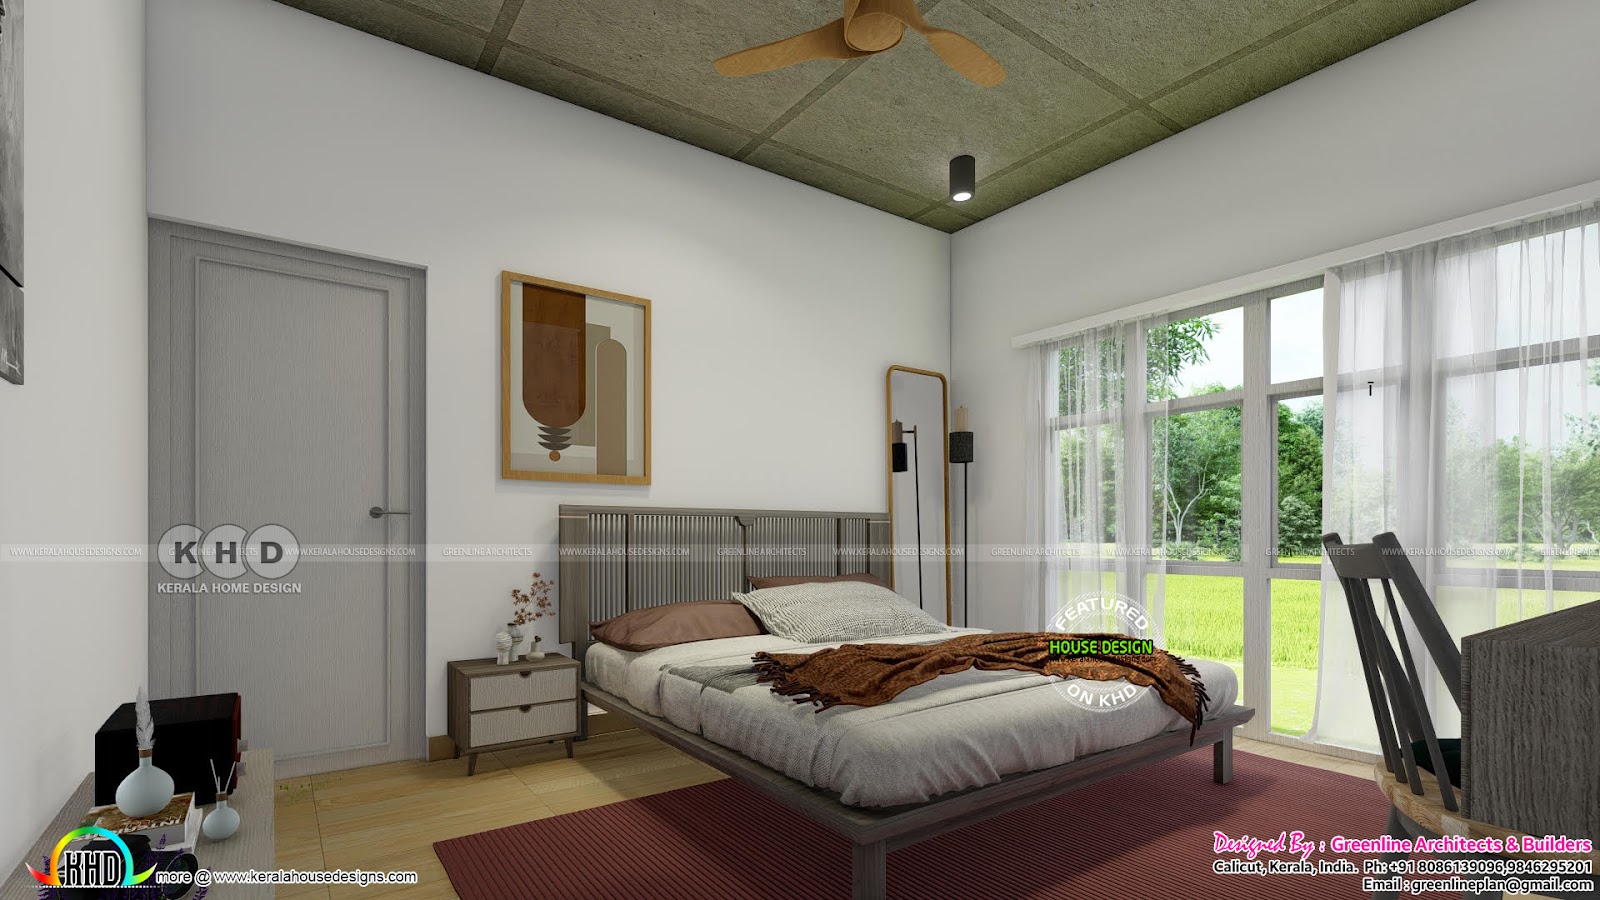 25 Stylish Bedroom Wall Decor Ideas - DigsDigs